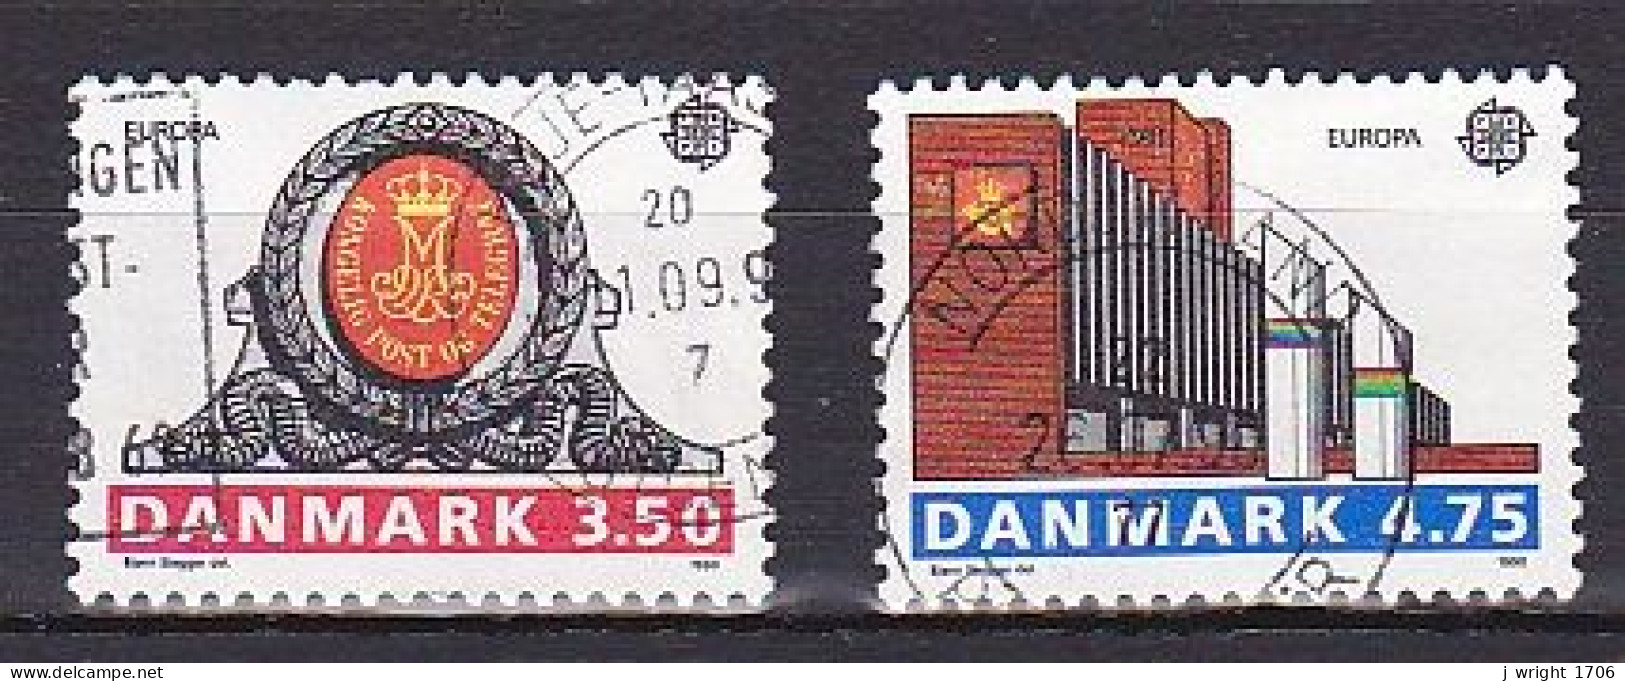 Denmark, 1990, Europa CEPT, Set, USED - Gebruikt